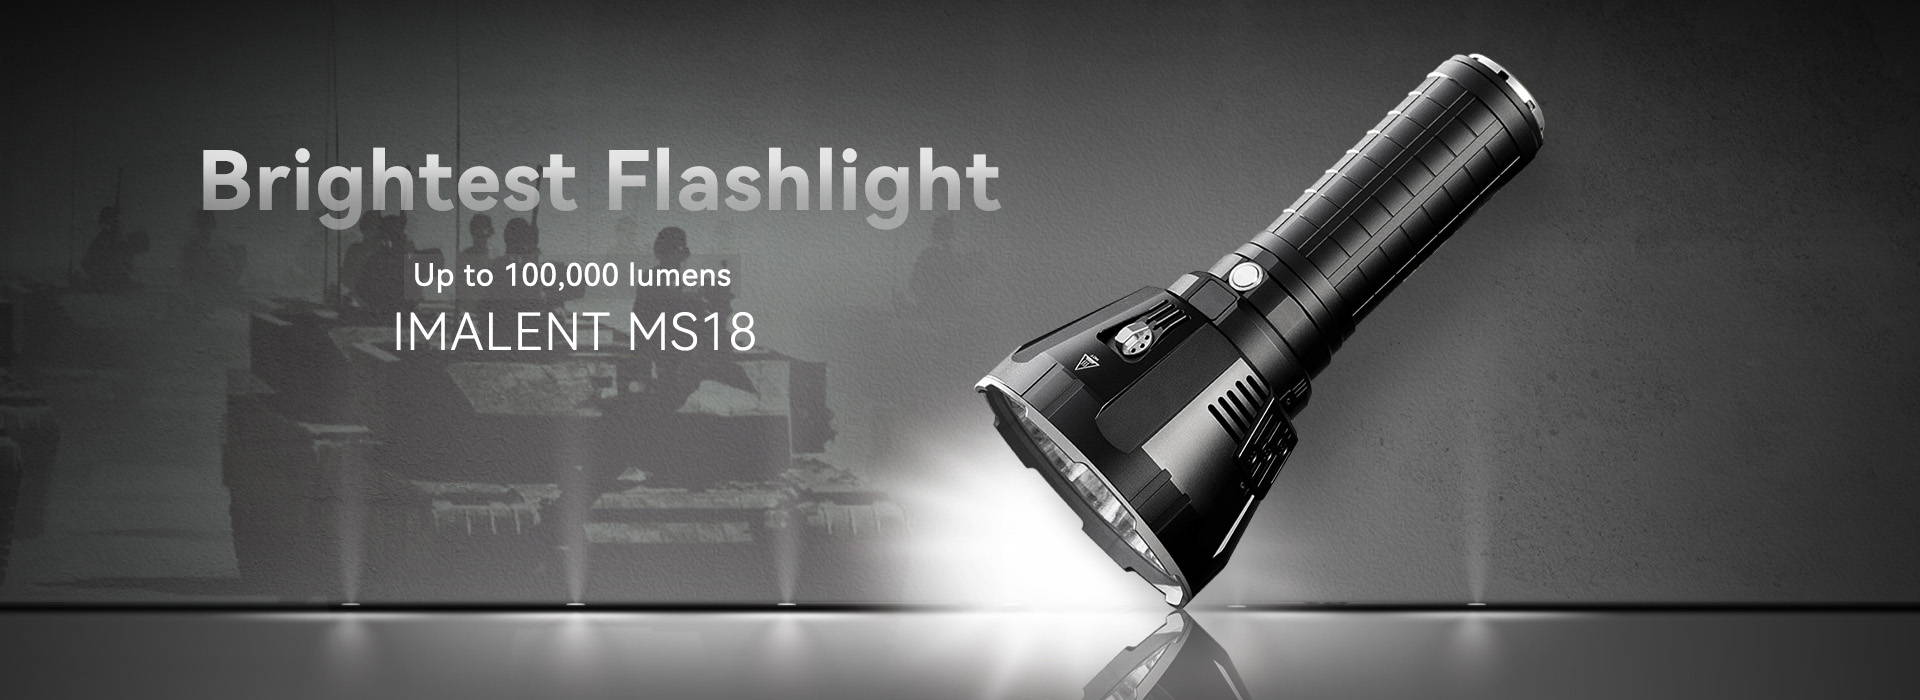 Brightest Flashlight IMALENT MS18